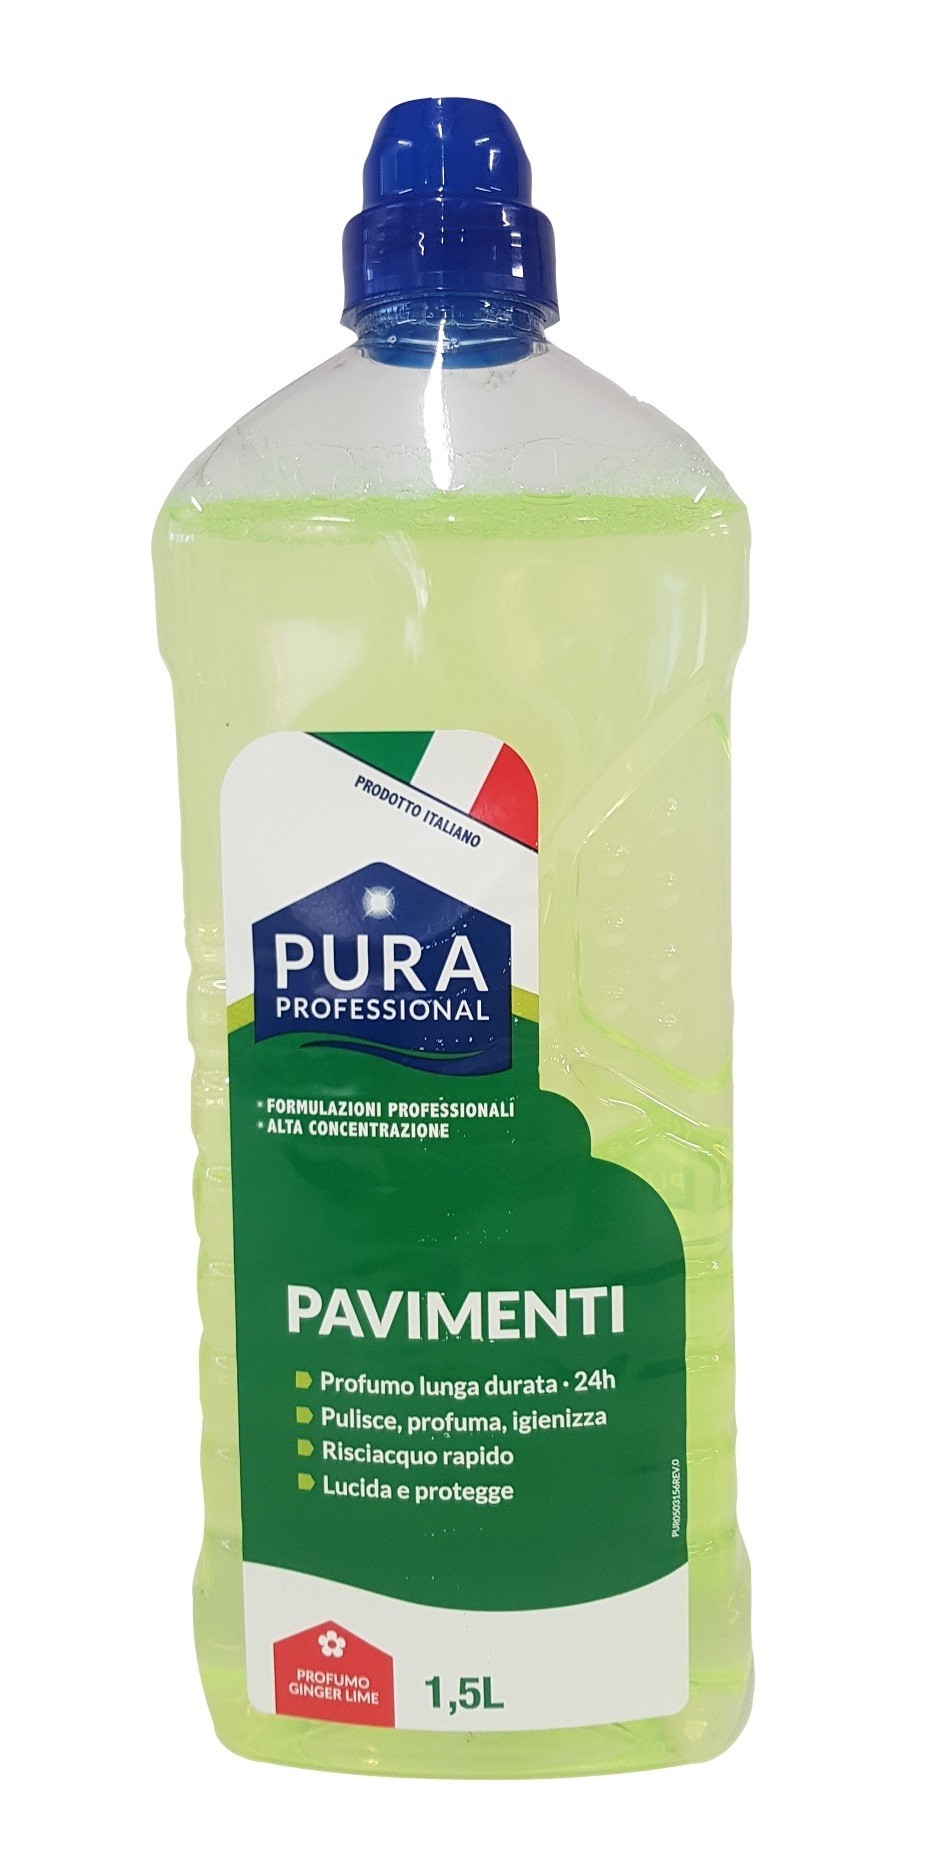 Pura Professional Detergente Pavimenti 1,5l